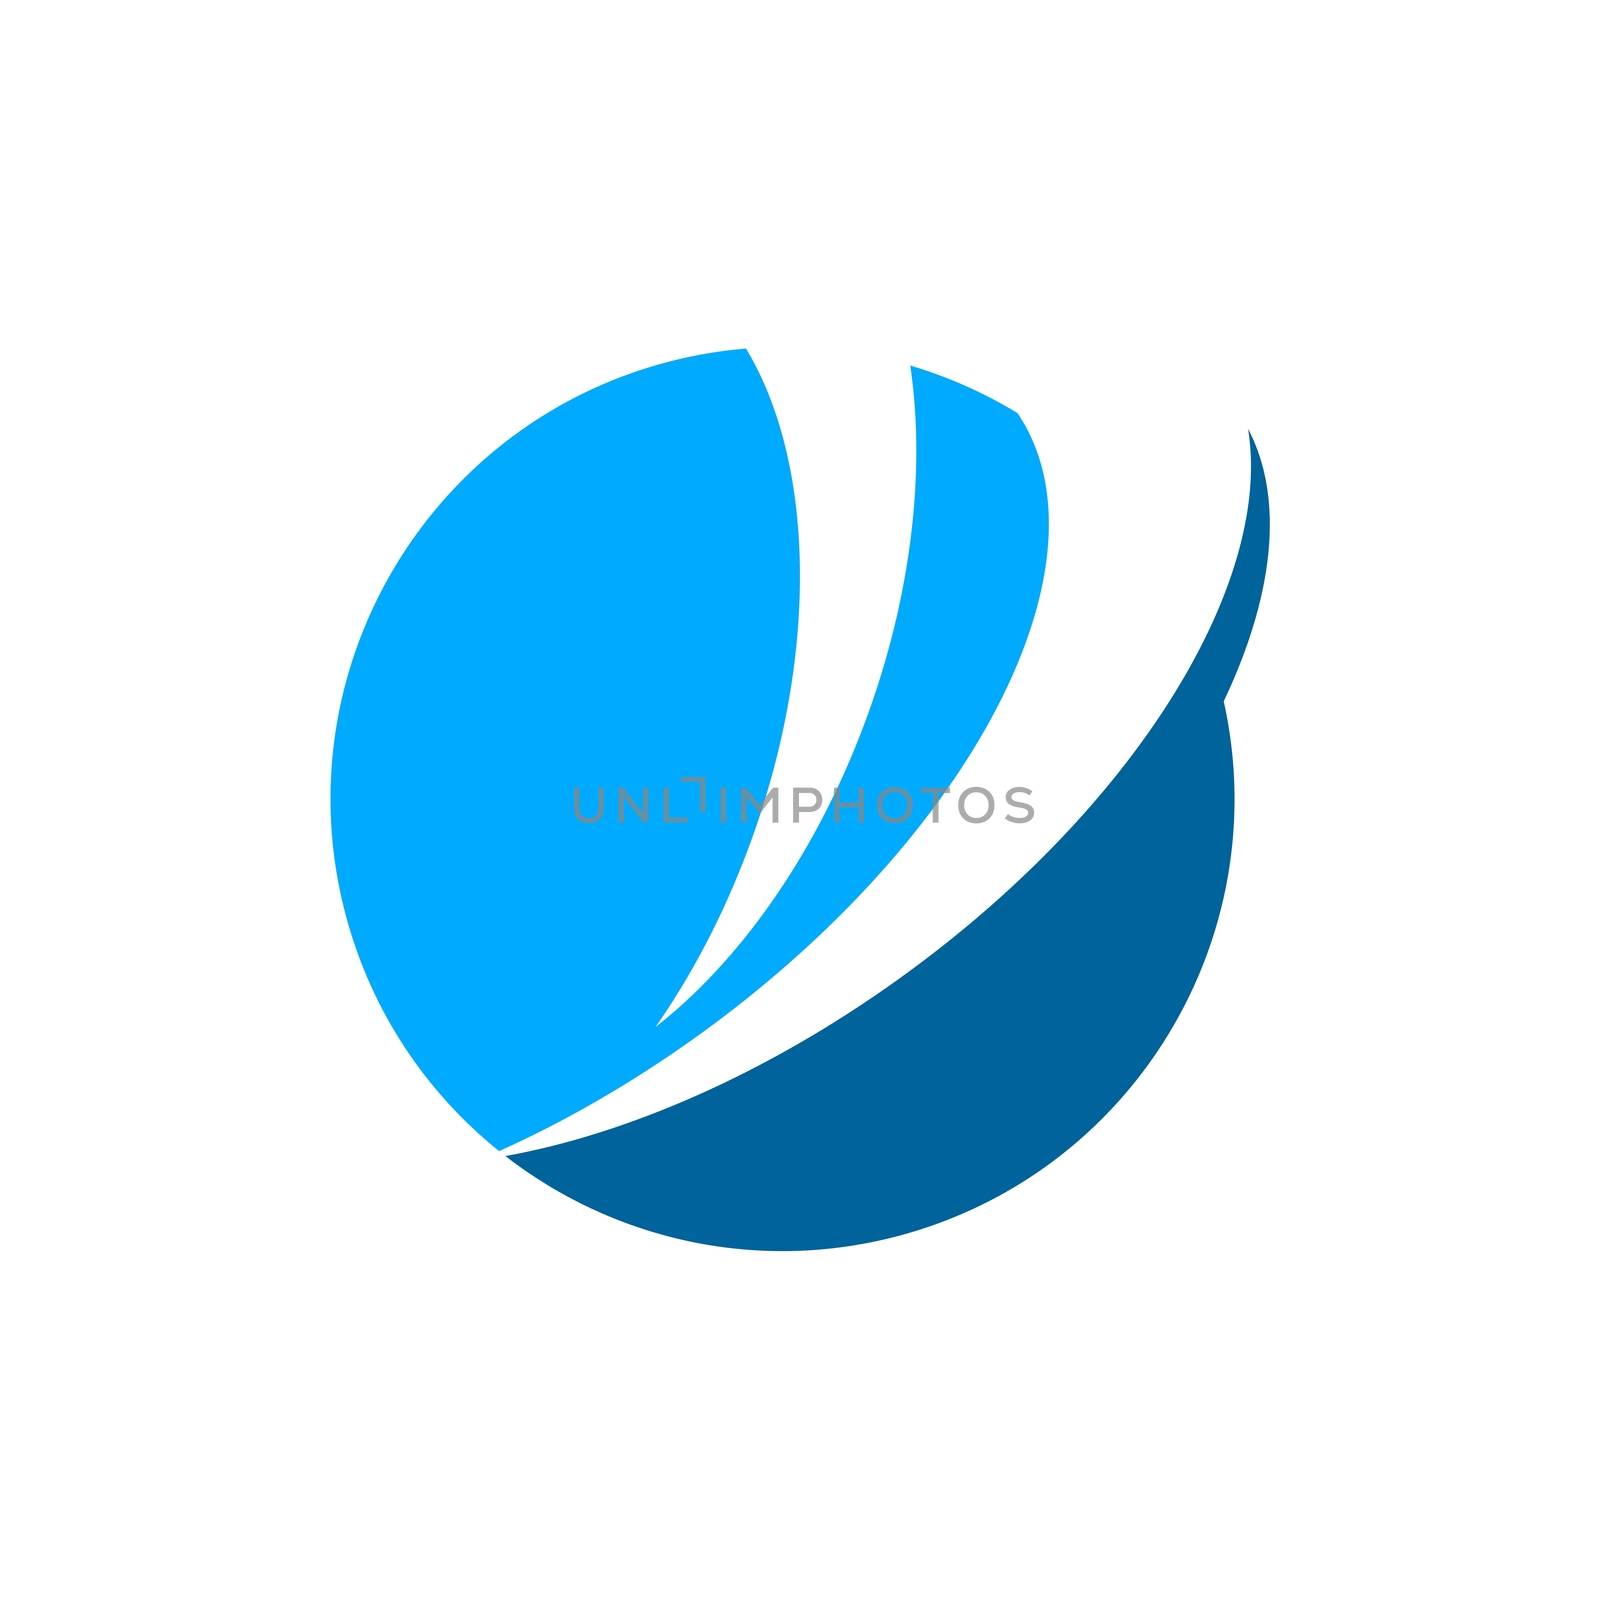 Abstract Planet Sphere Logo Template Illustration Design. Vector EPS 10.